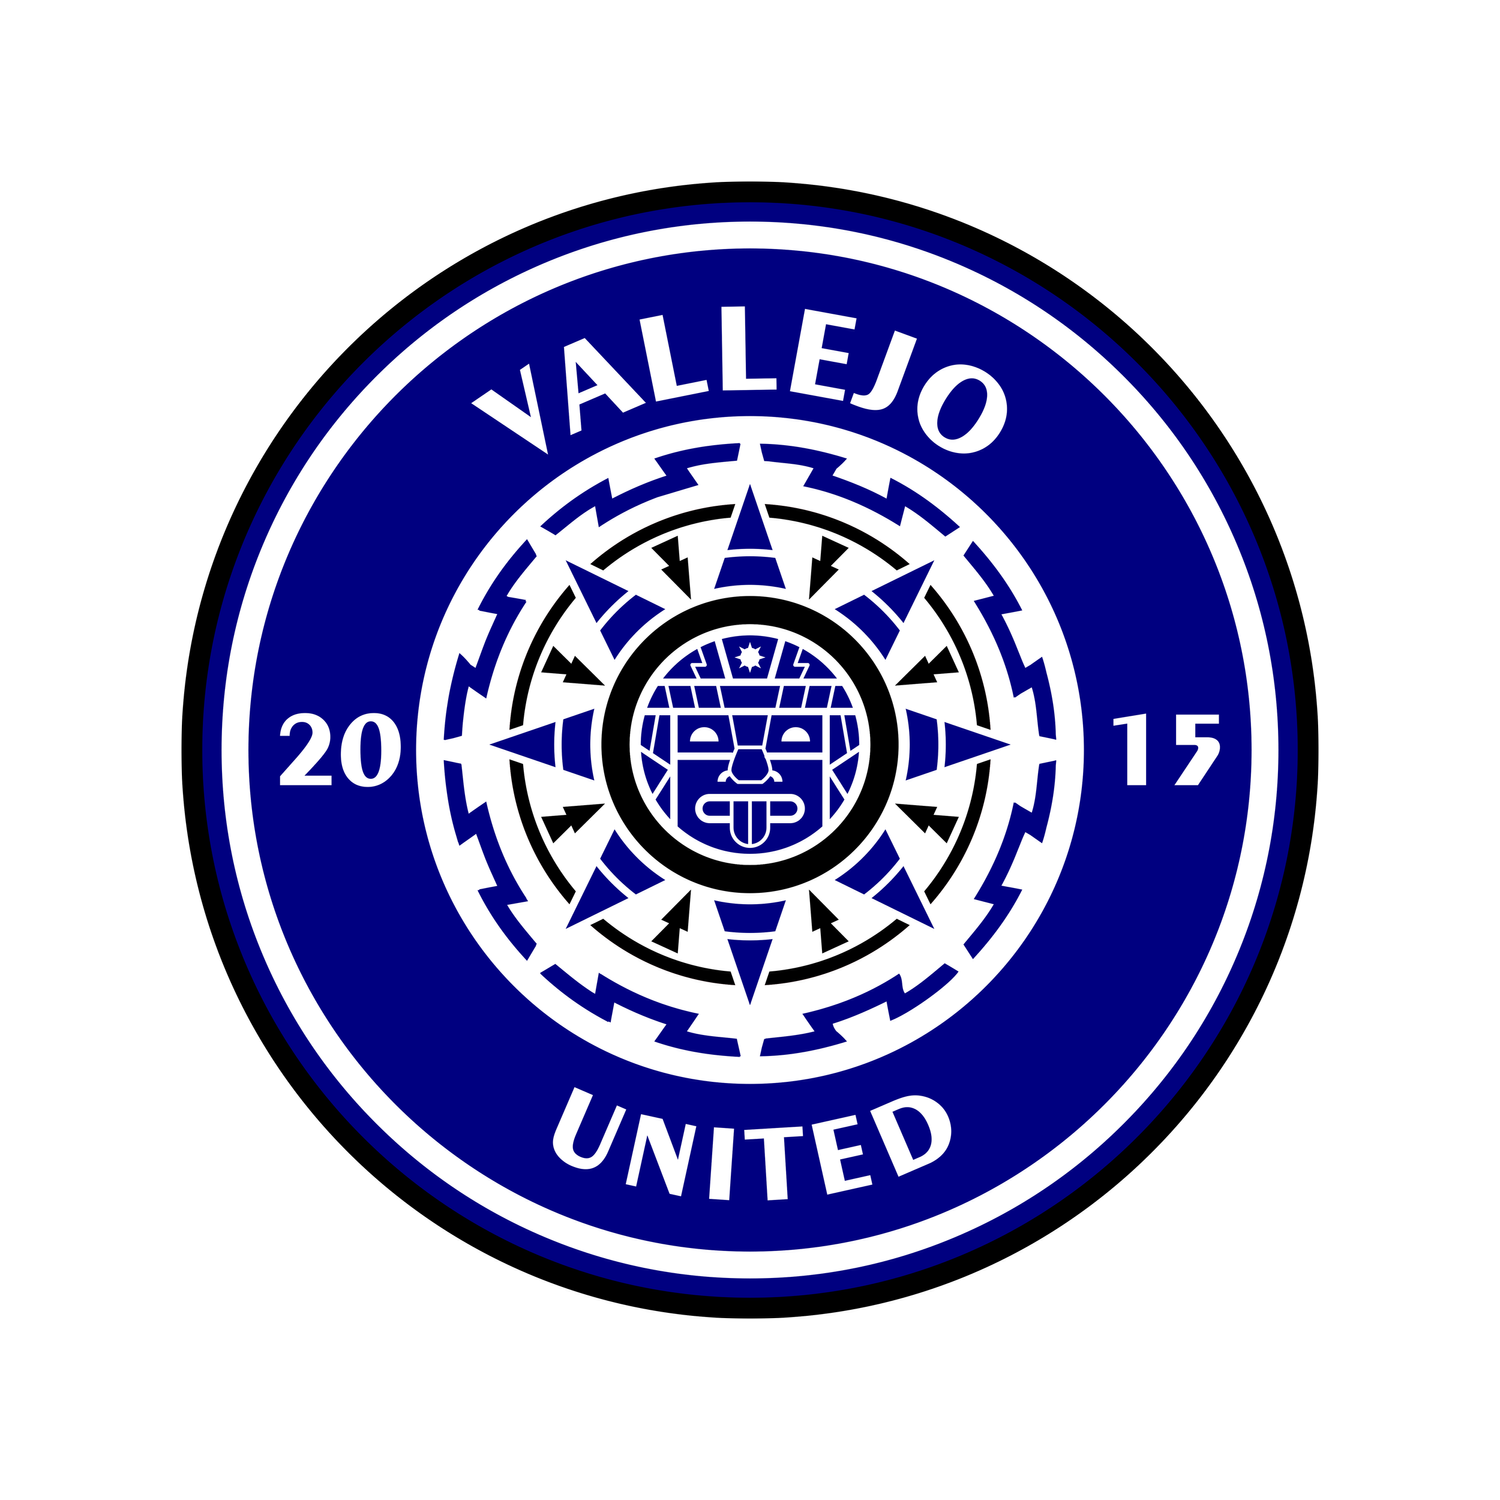 Vallejo United Soccer Club